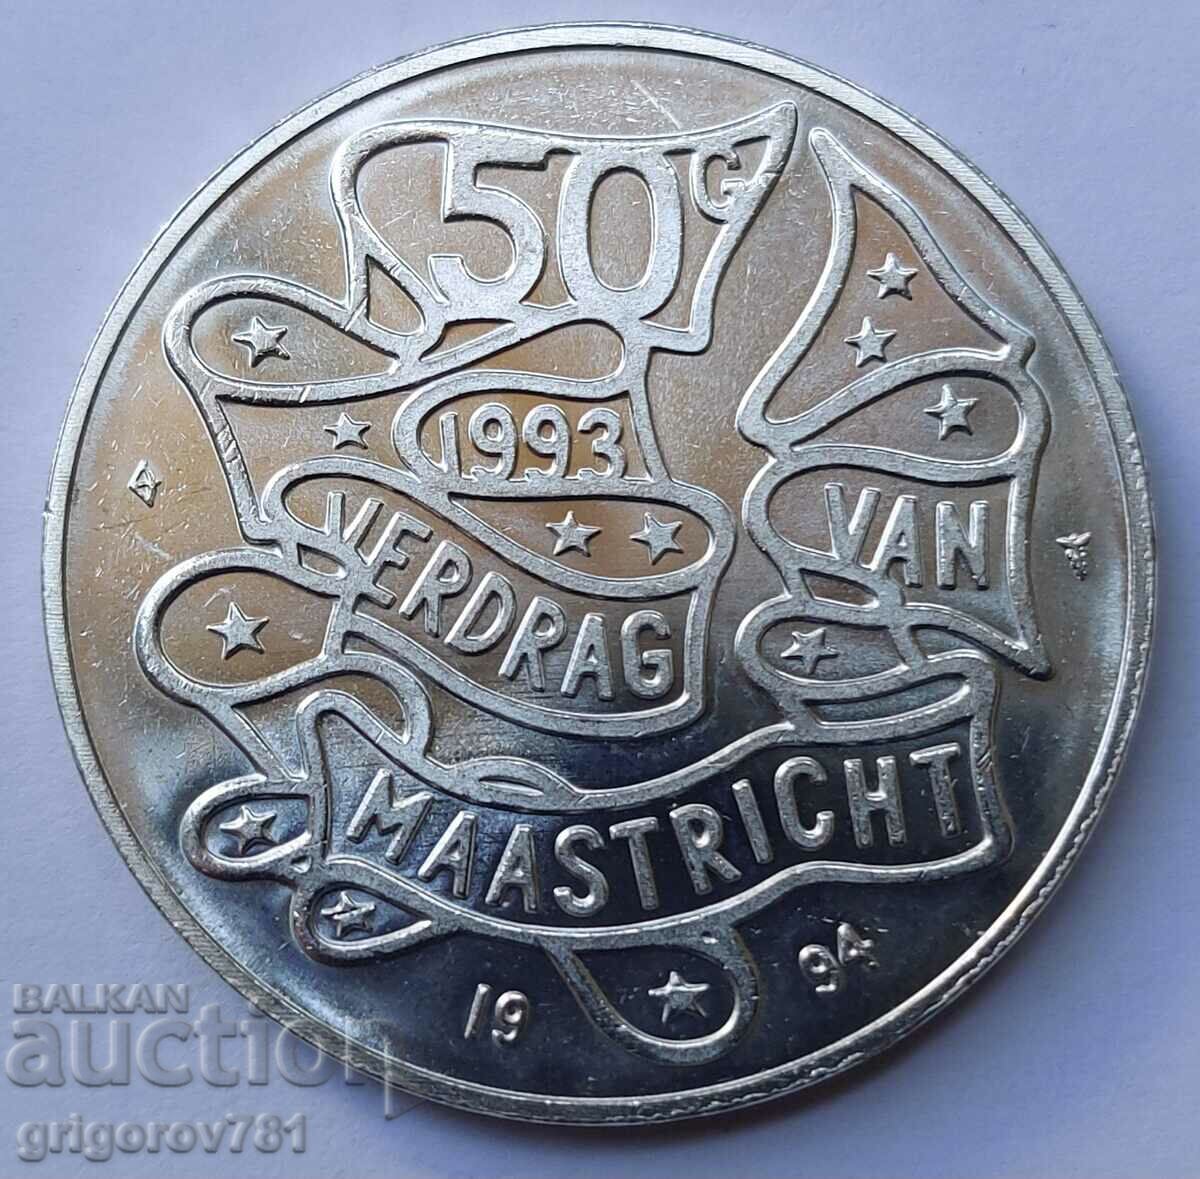 50 Guilder Silver Netherlands 1994 - Silver Coin #1